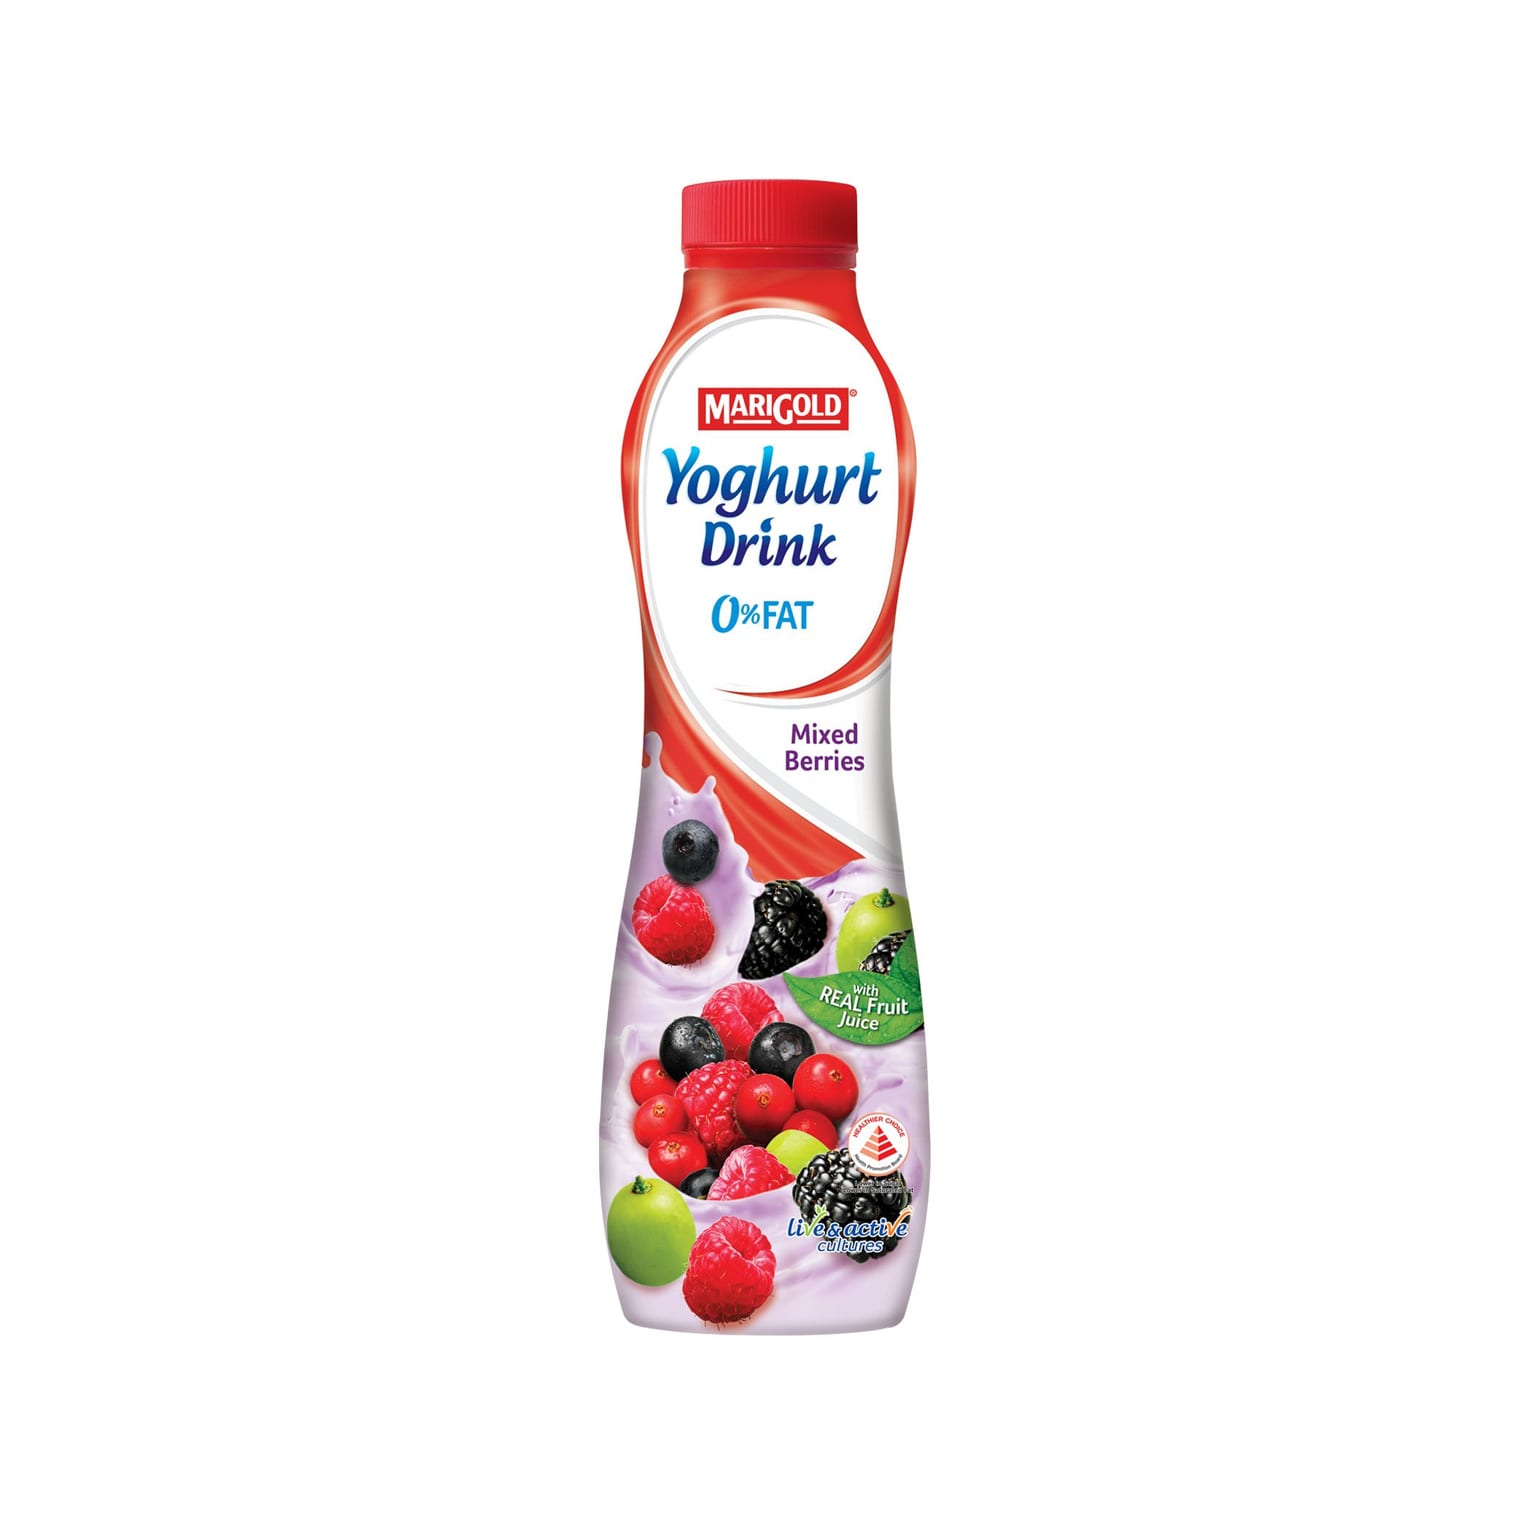 Marigold Yoghurt Drink Mixed Berries 700g – Shopifull